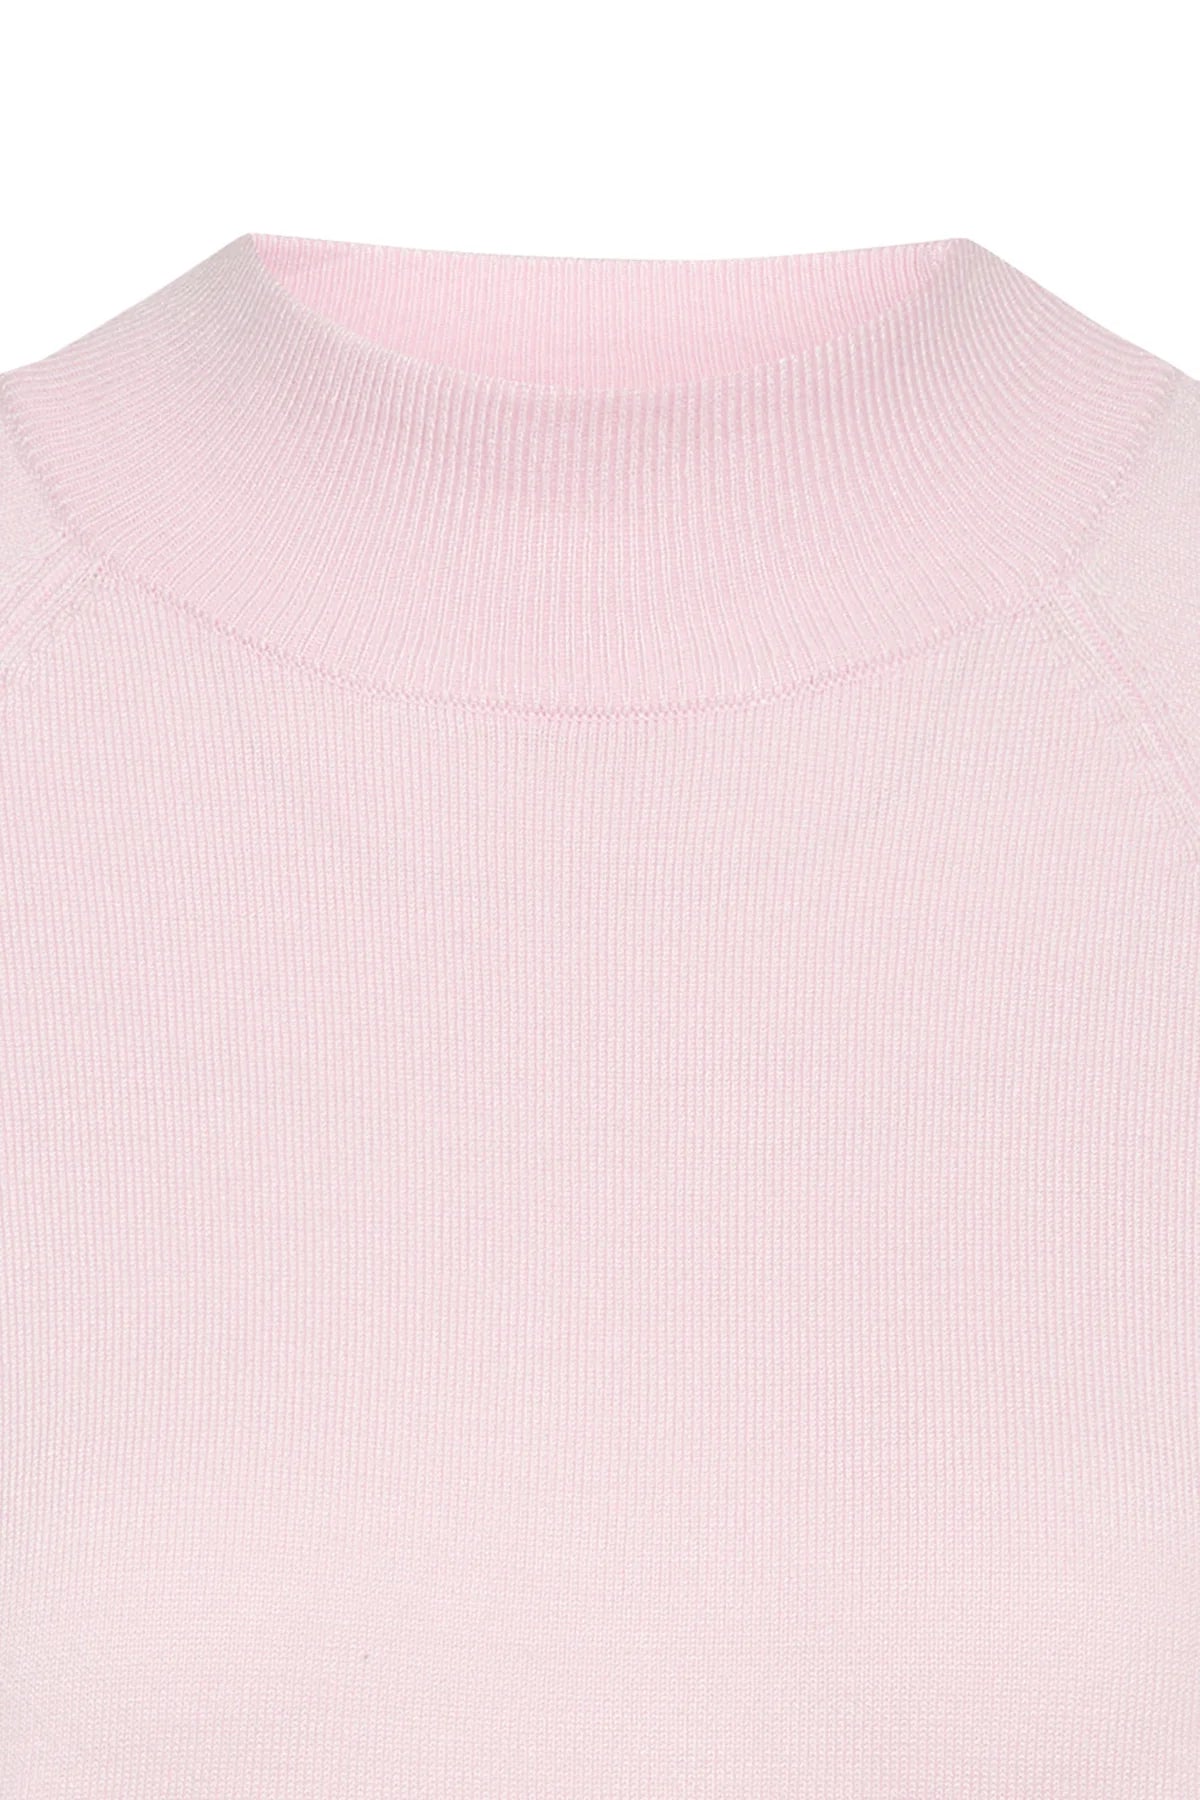 AnemoneBBHalias knit - Light rosa